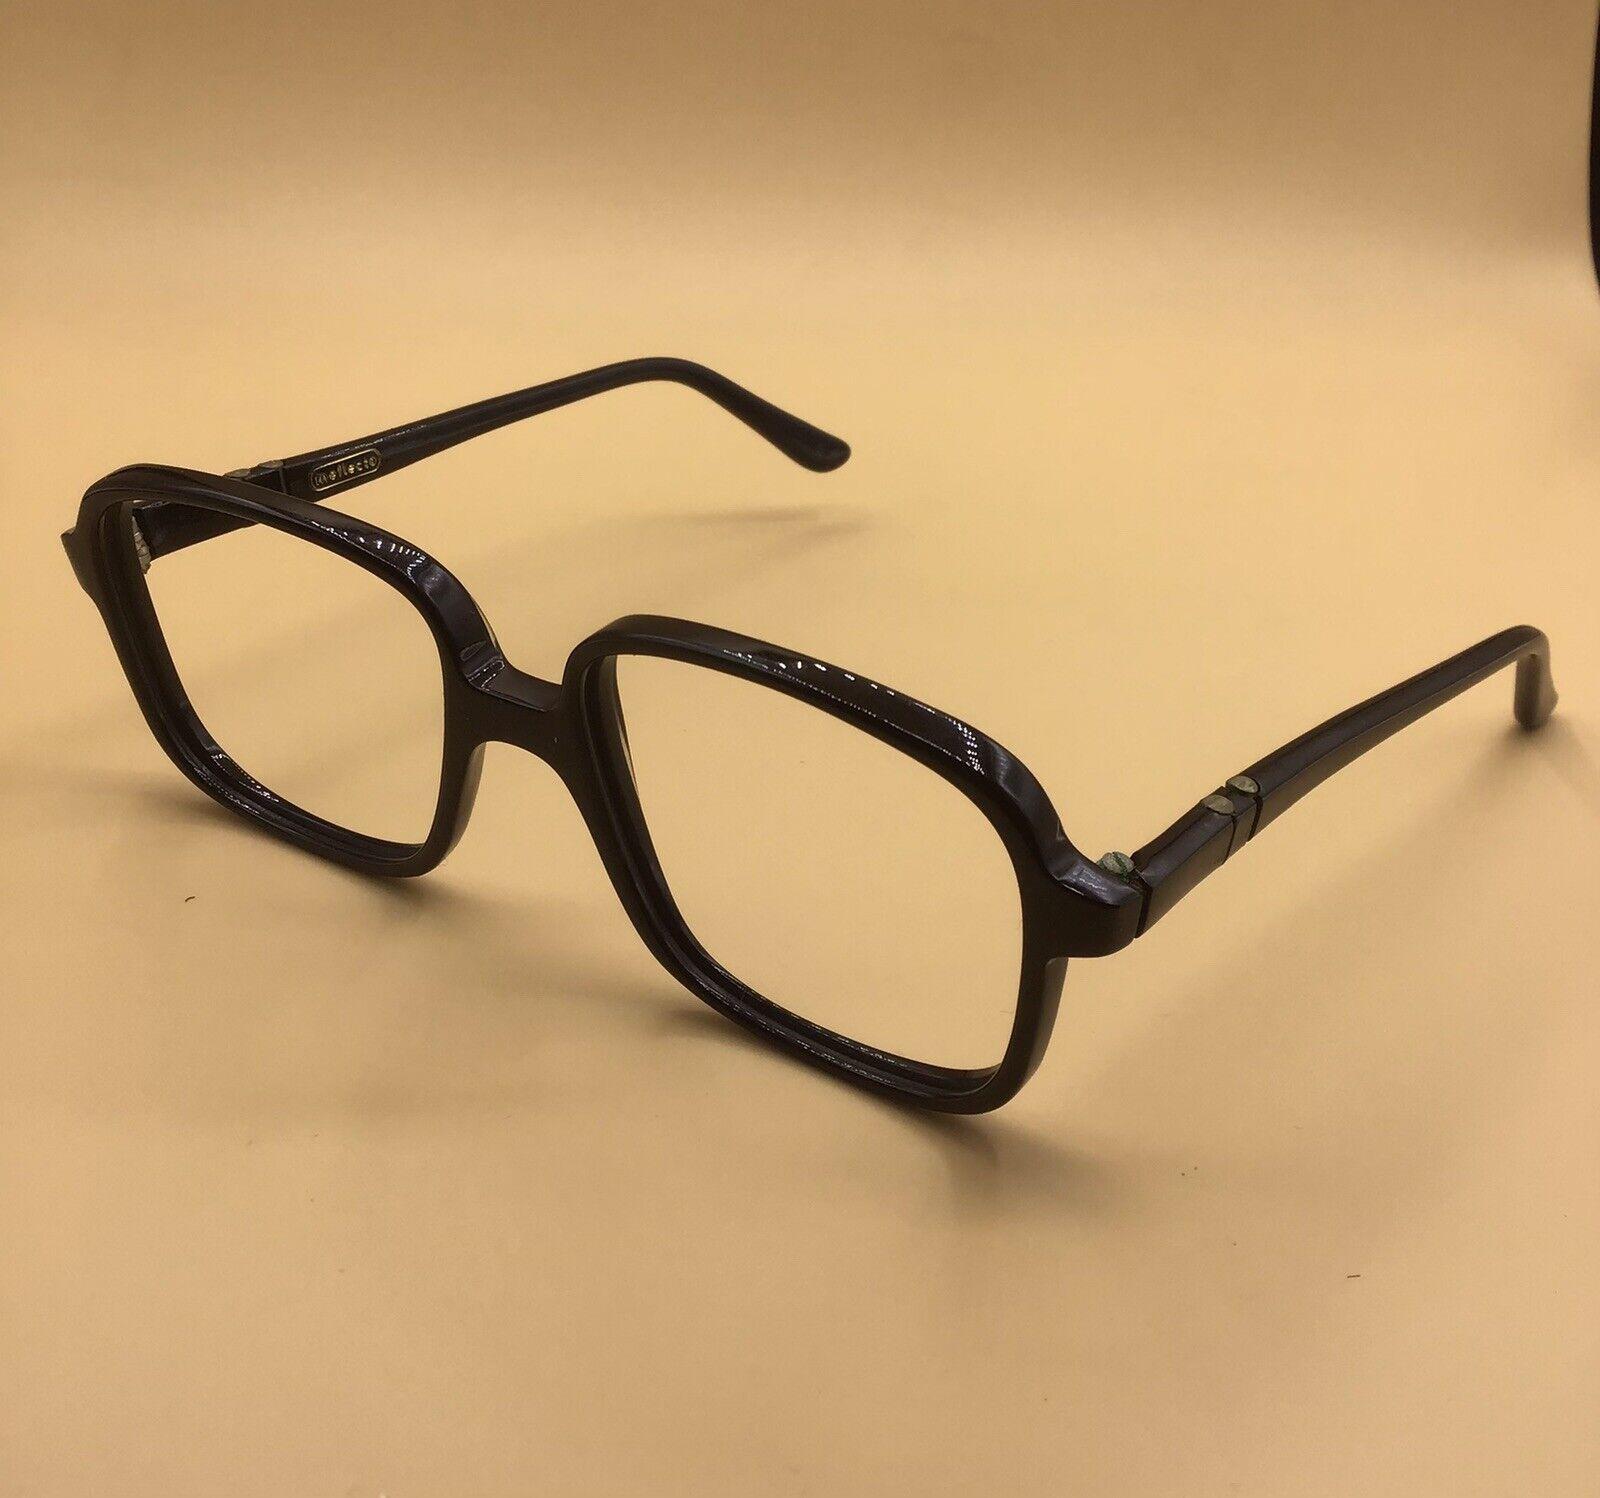 Persol Ratti meflecto occhiale vintage eyewear brillen lunettes